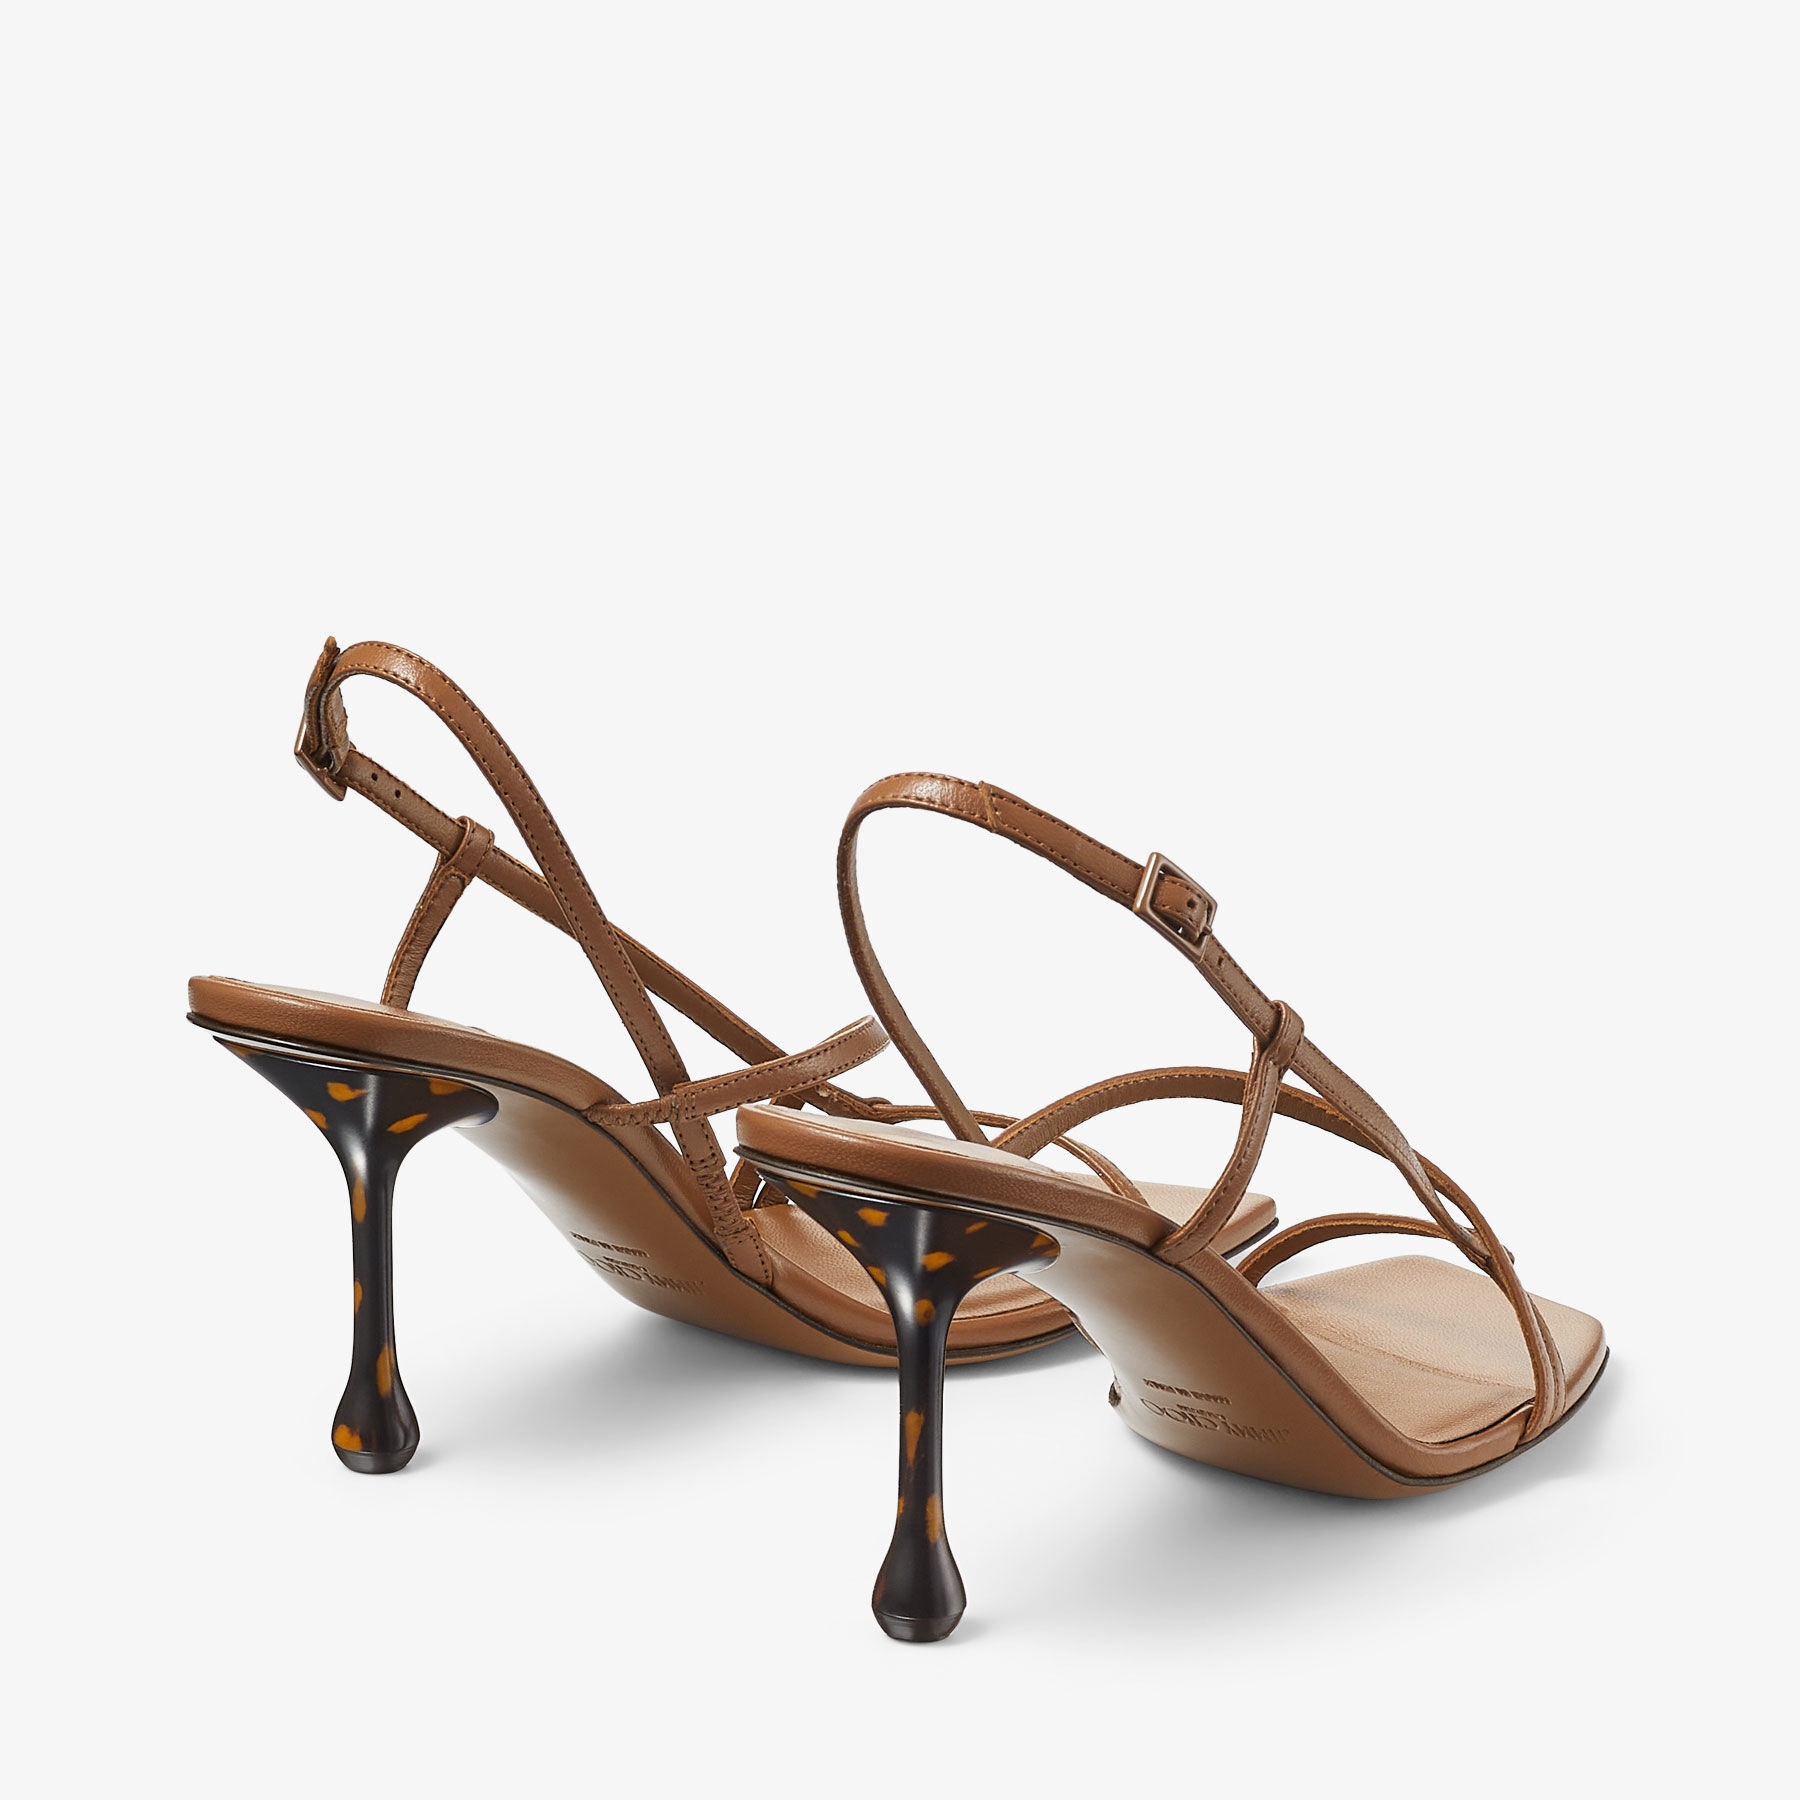 Etana 80
Tan/Tortoise Nappa Leather Sandals - 4